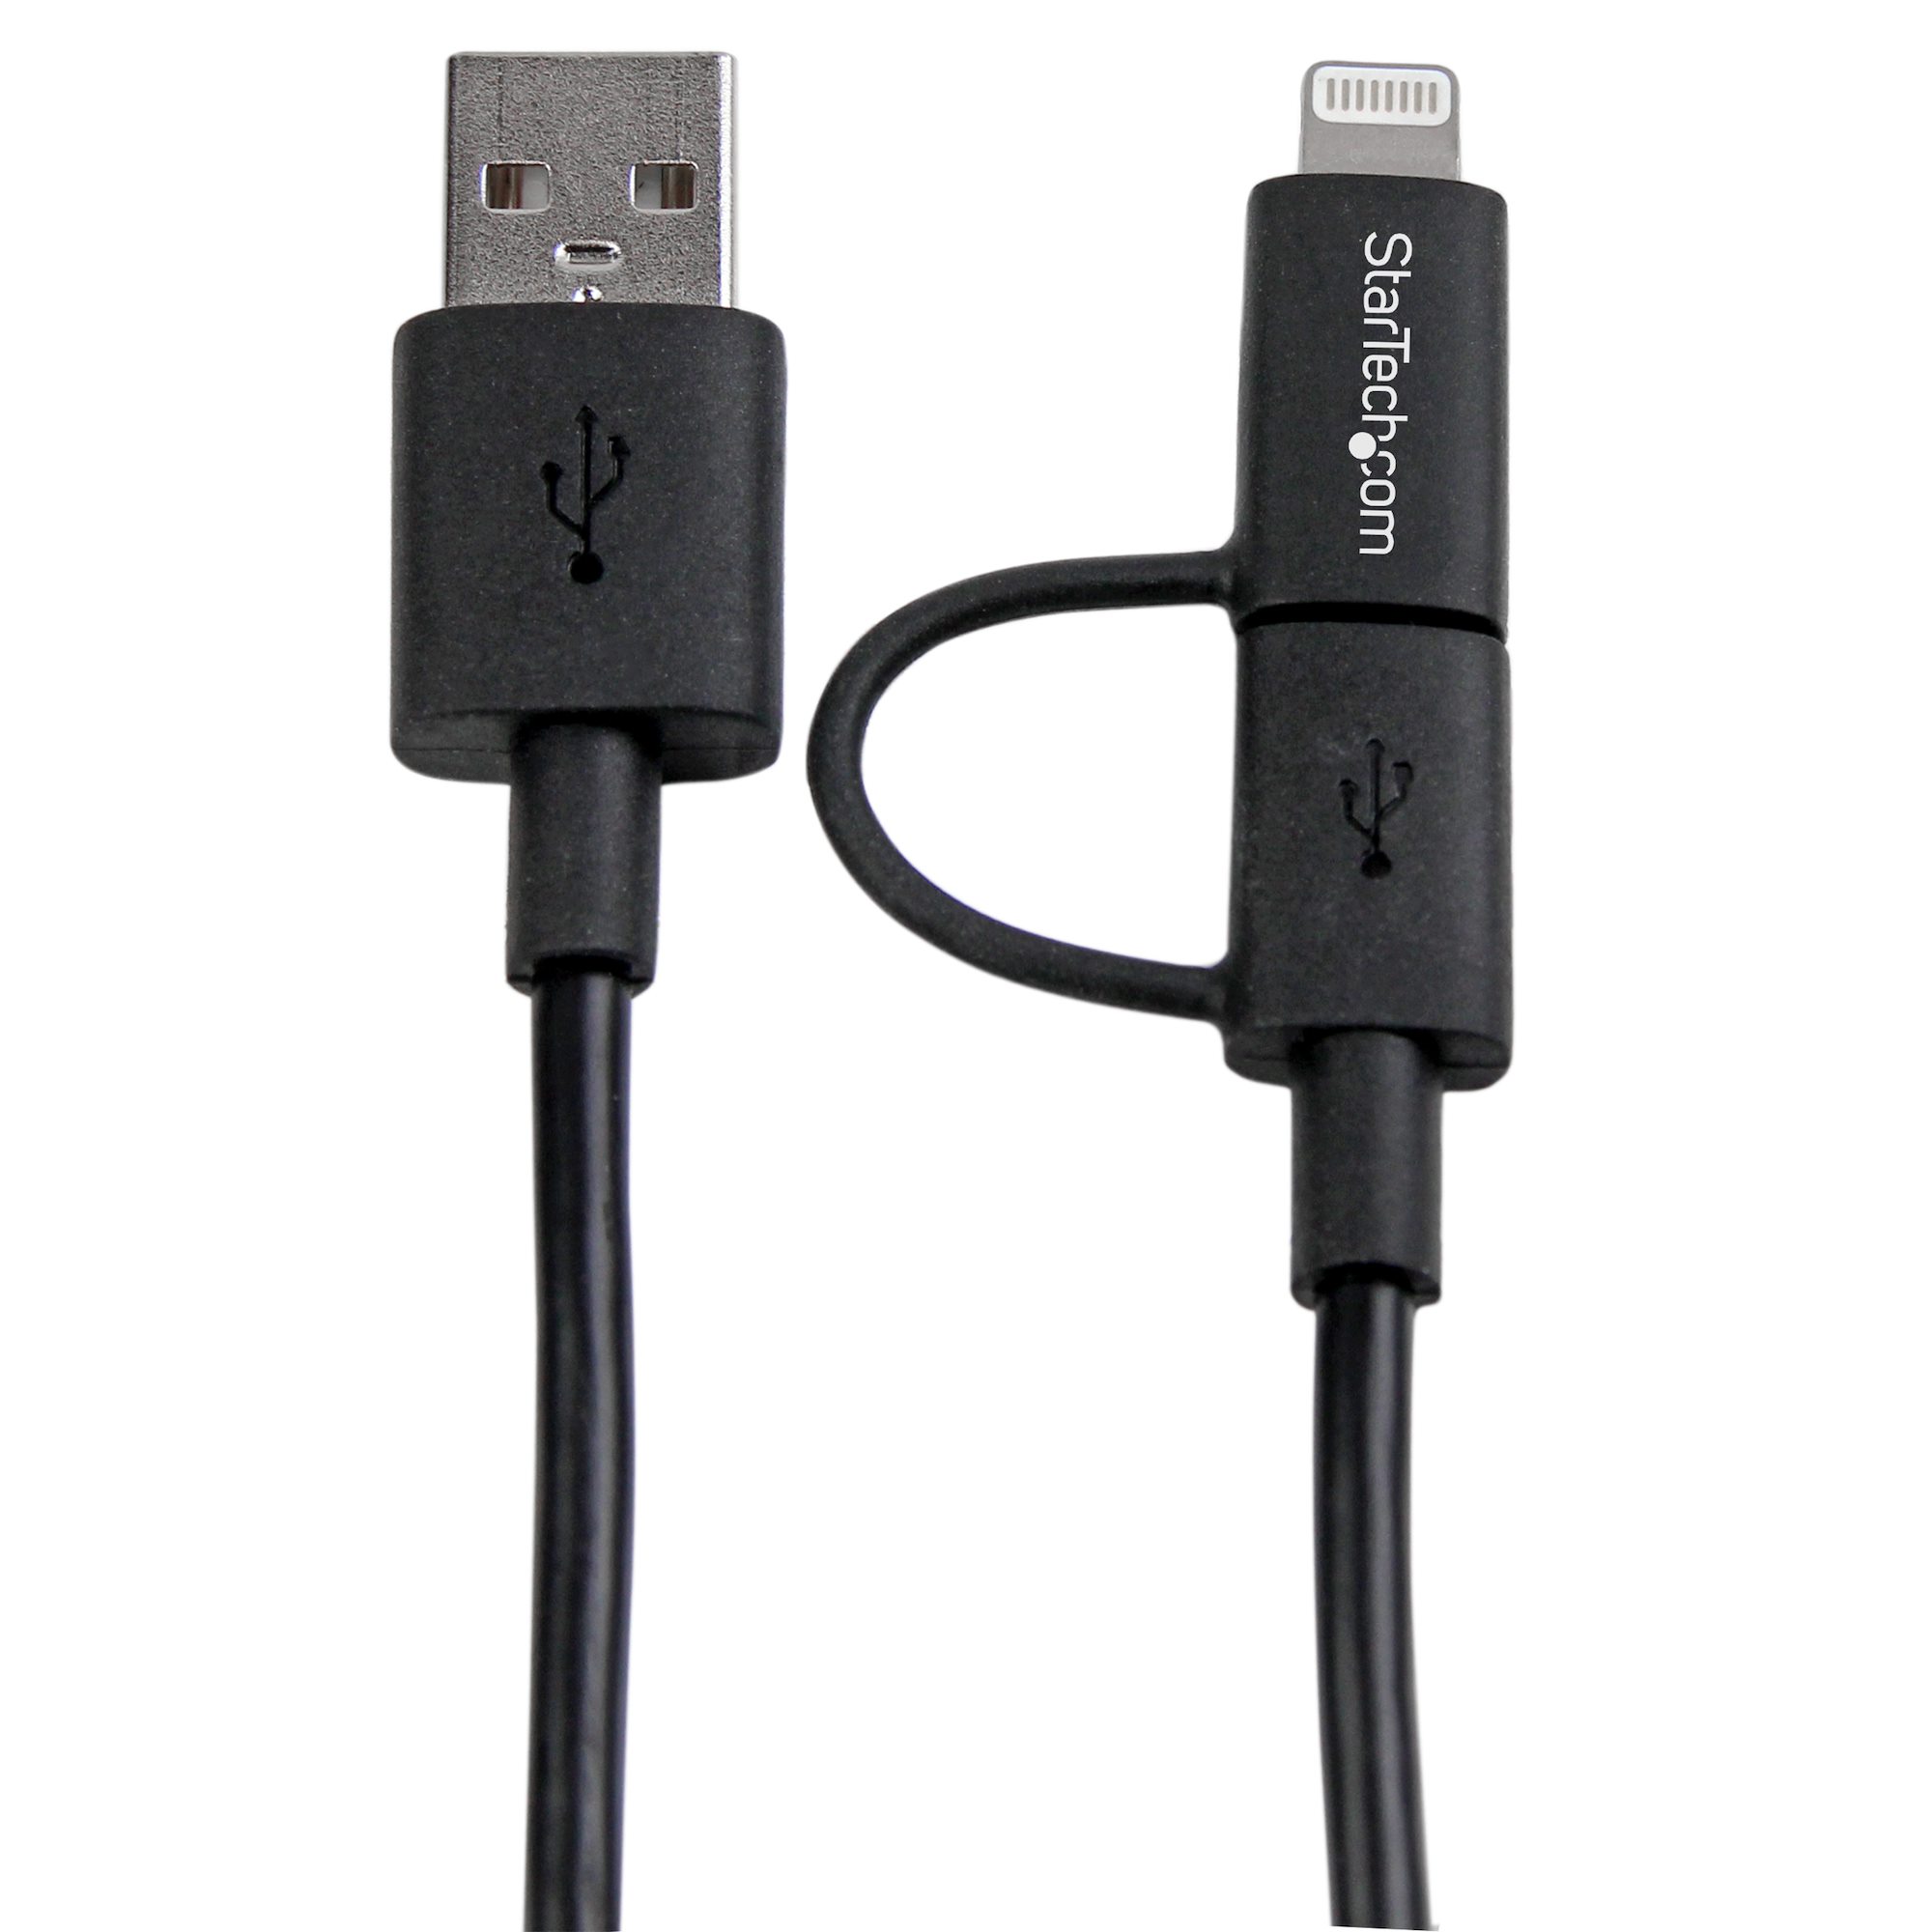 Cable Cargador Select Power / 1.2 m / Micro USB / Tipo C / Lightning /  Negro, Tipo C, Cables para celular, Telefonía Fija y Celulares, Todas, Categoría